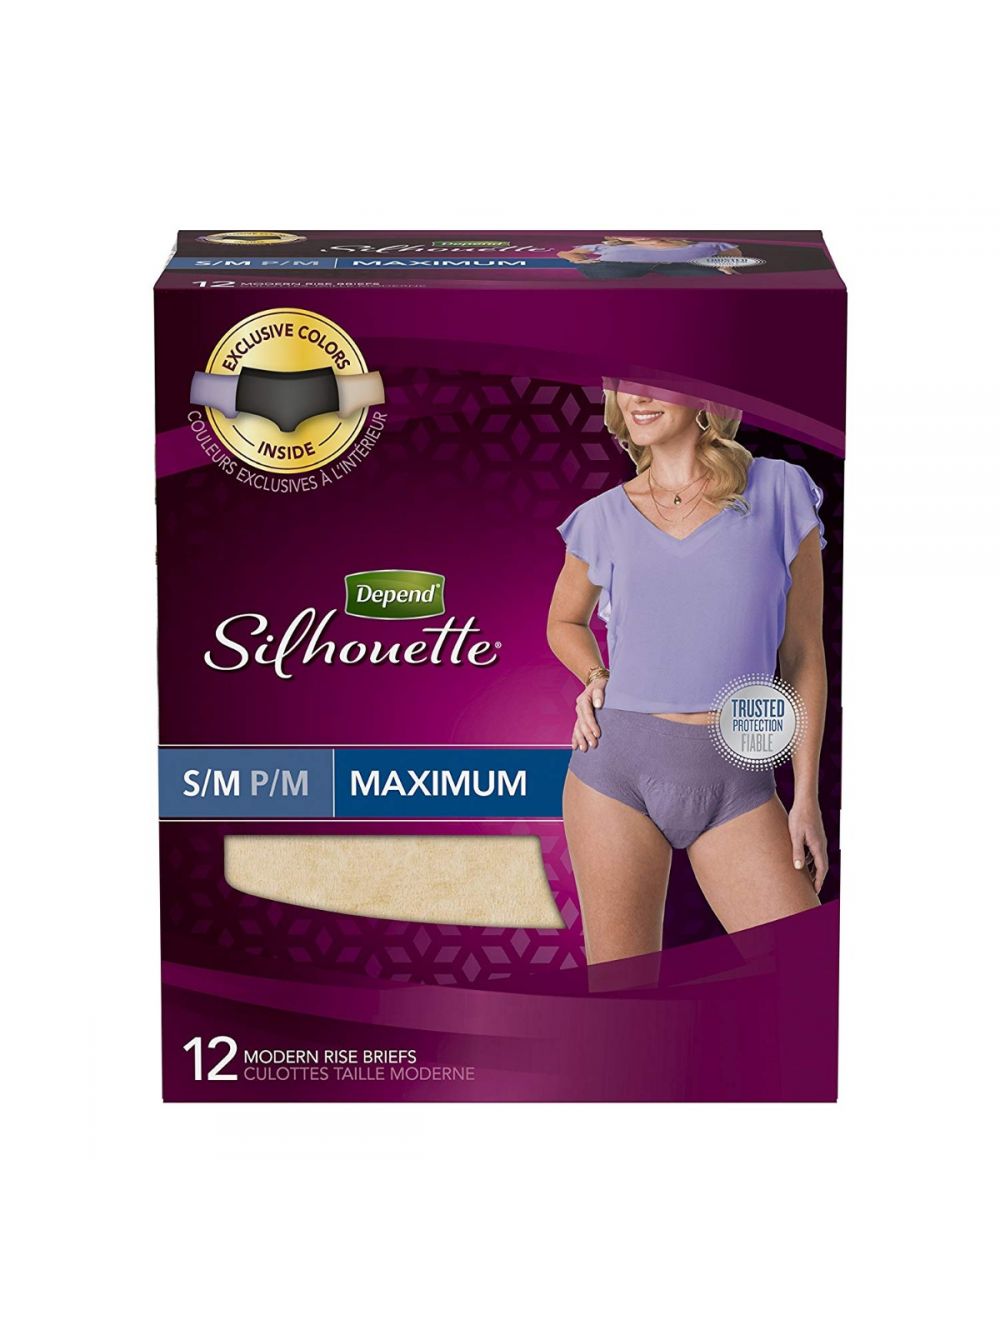 https://www.usawheelchair.com/pub/media/catalog/product/cache/ddb236bdd69ff7cc1401d94c525e1745/p/r/protective-underwear-kimberly-clark-depend-silhouette-2.jpg